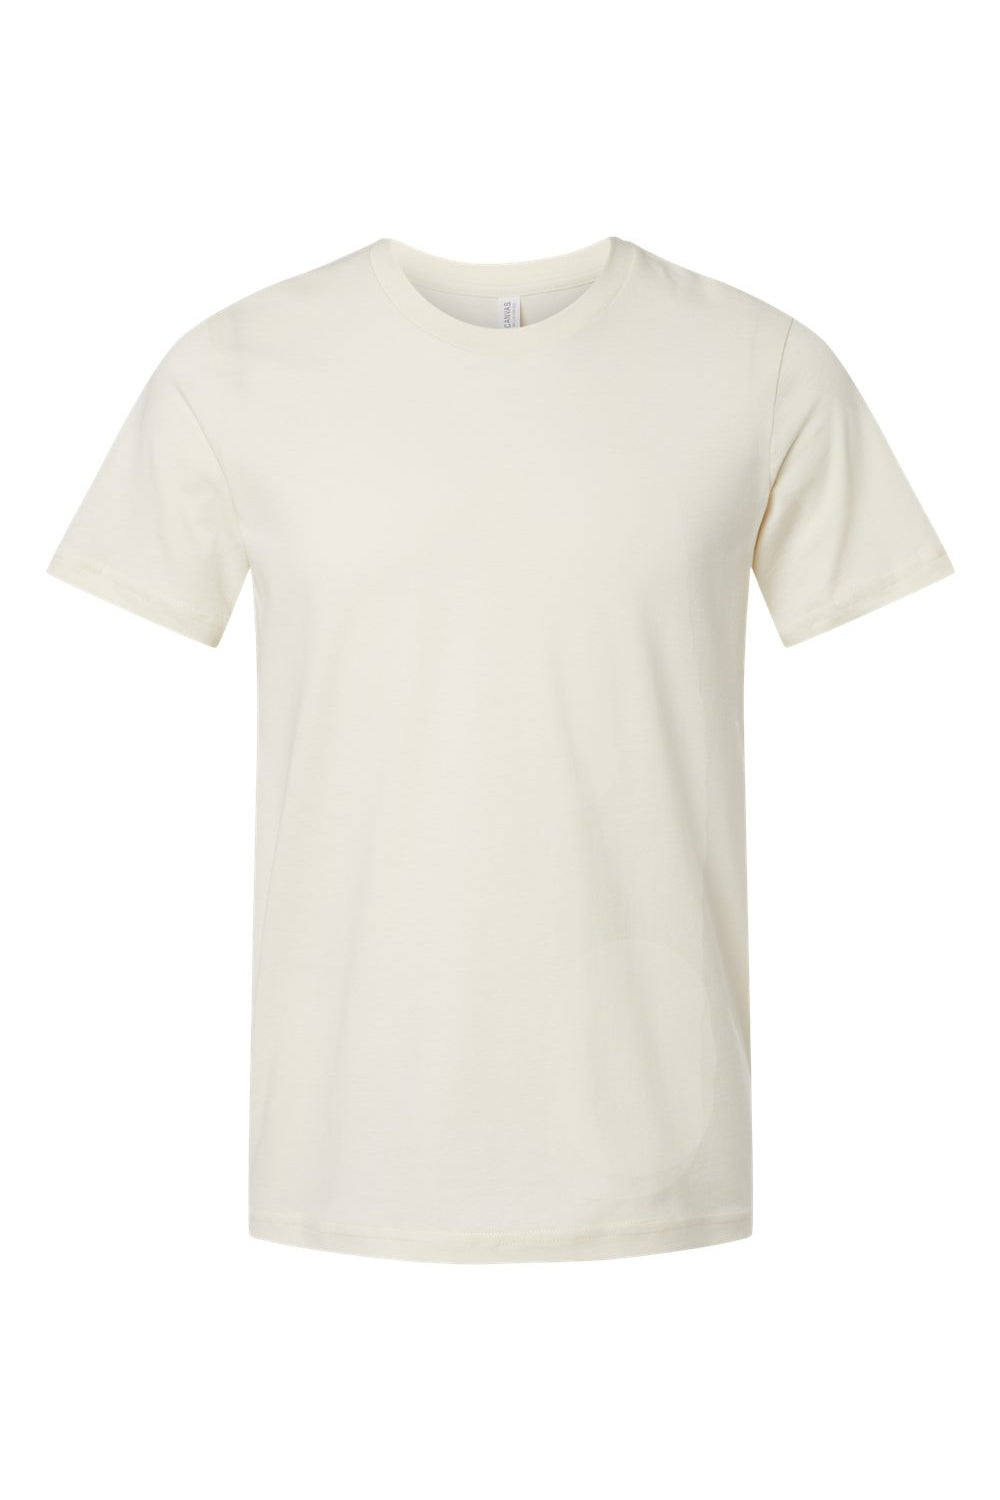 Bella + Canvas 3001U/3001USA Mens USA Made Jersey Short Sleeve Crewneck T-Shirt Natural Flat Front